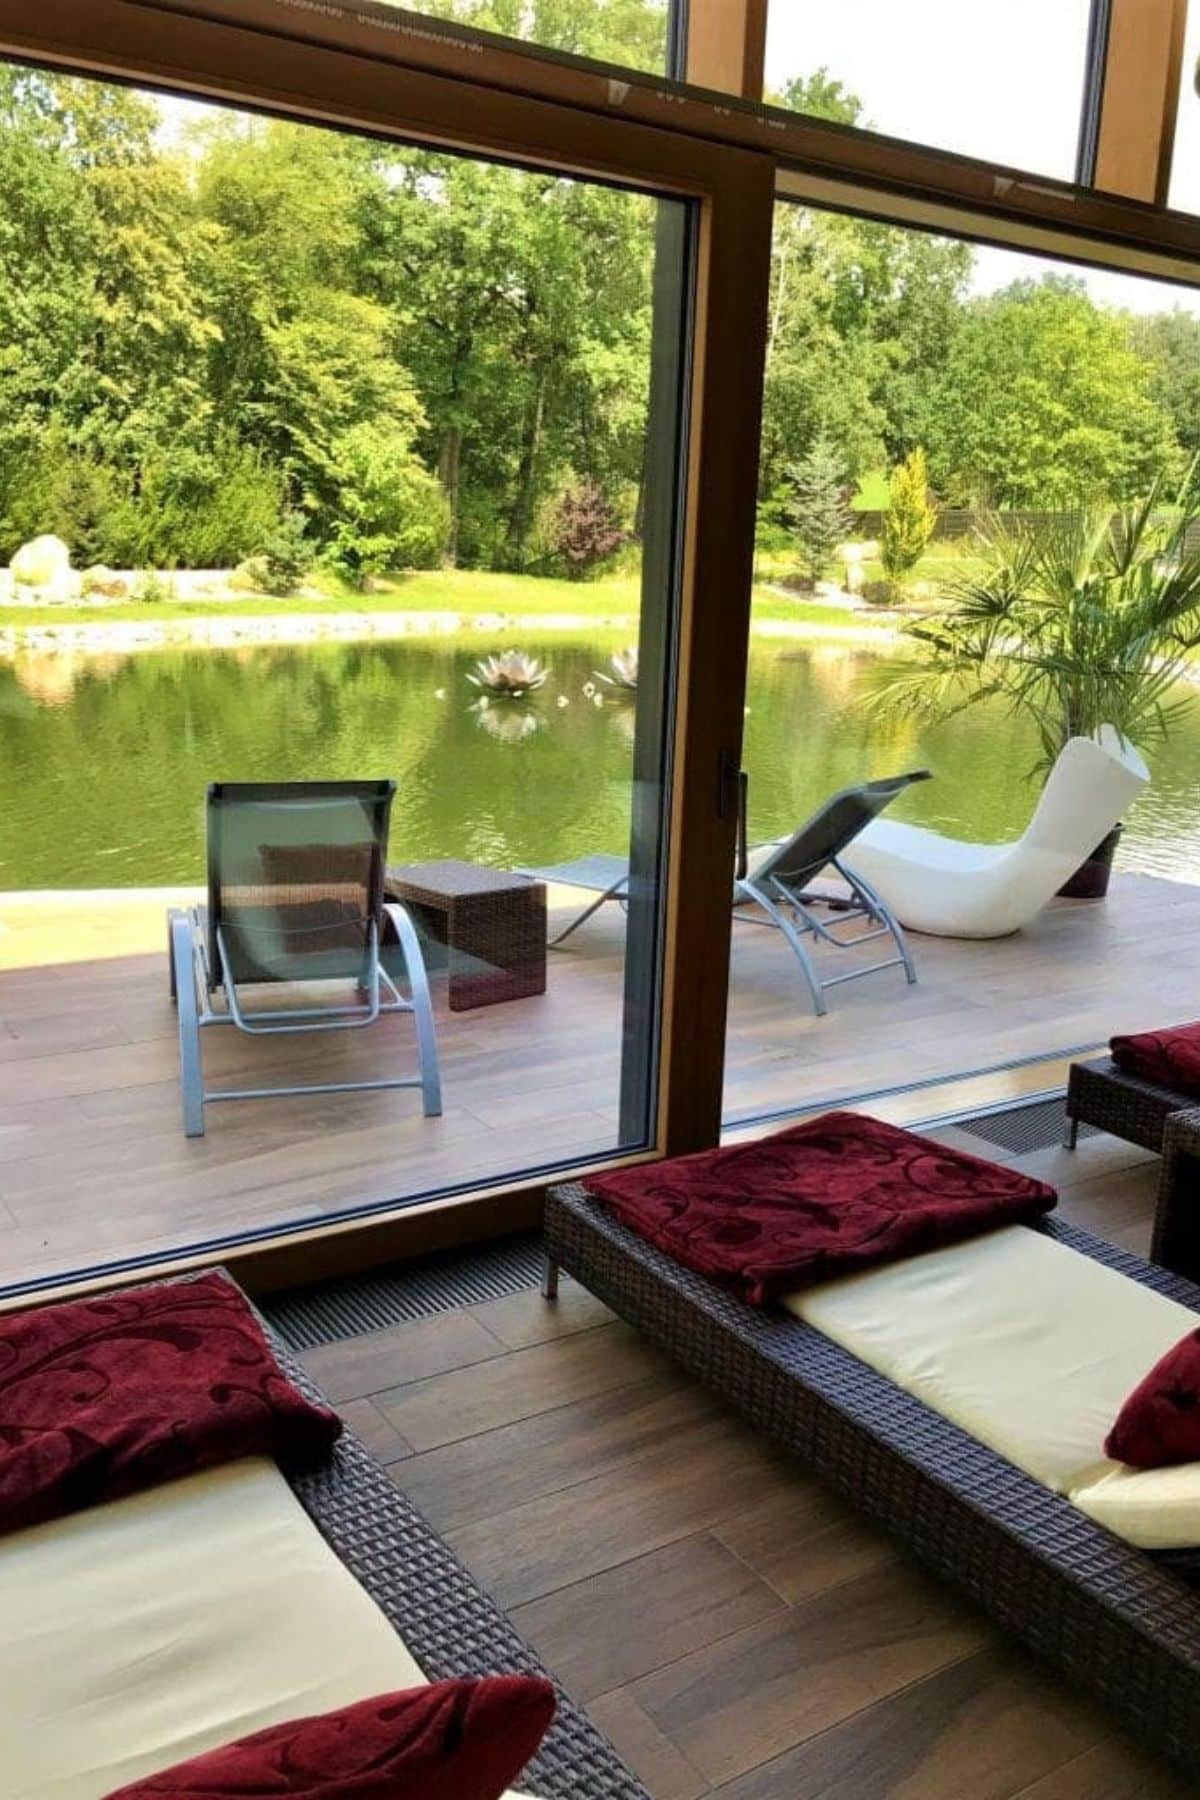 Lounge chairs through window overlooking lake.